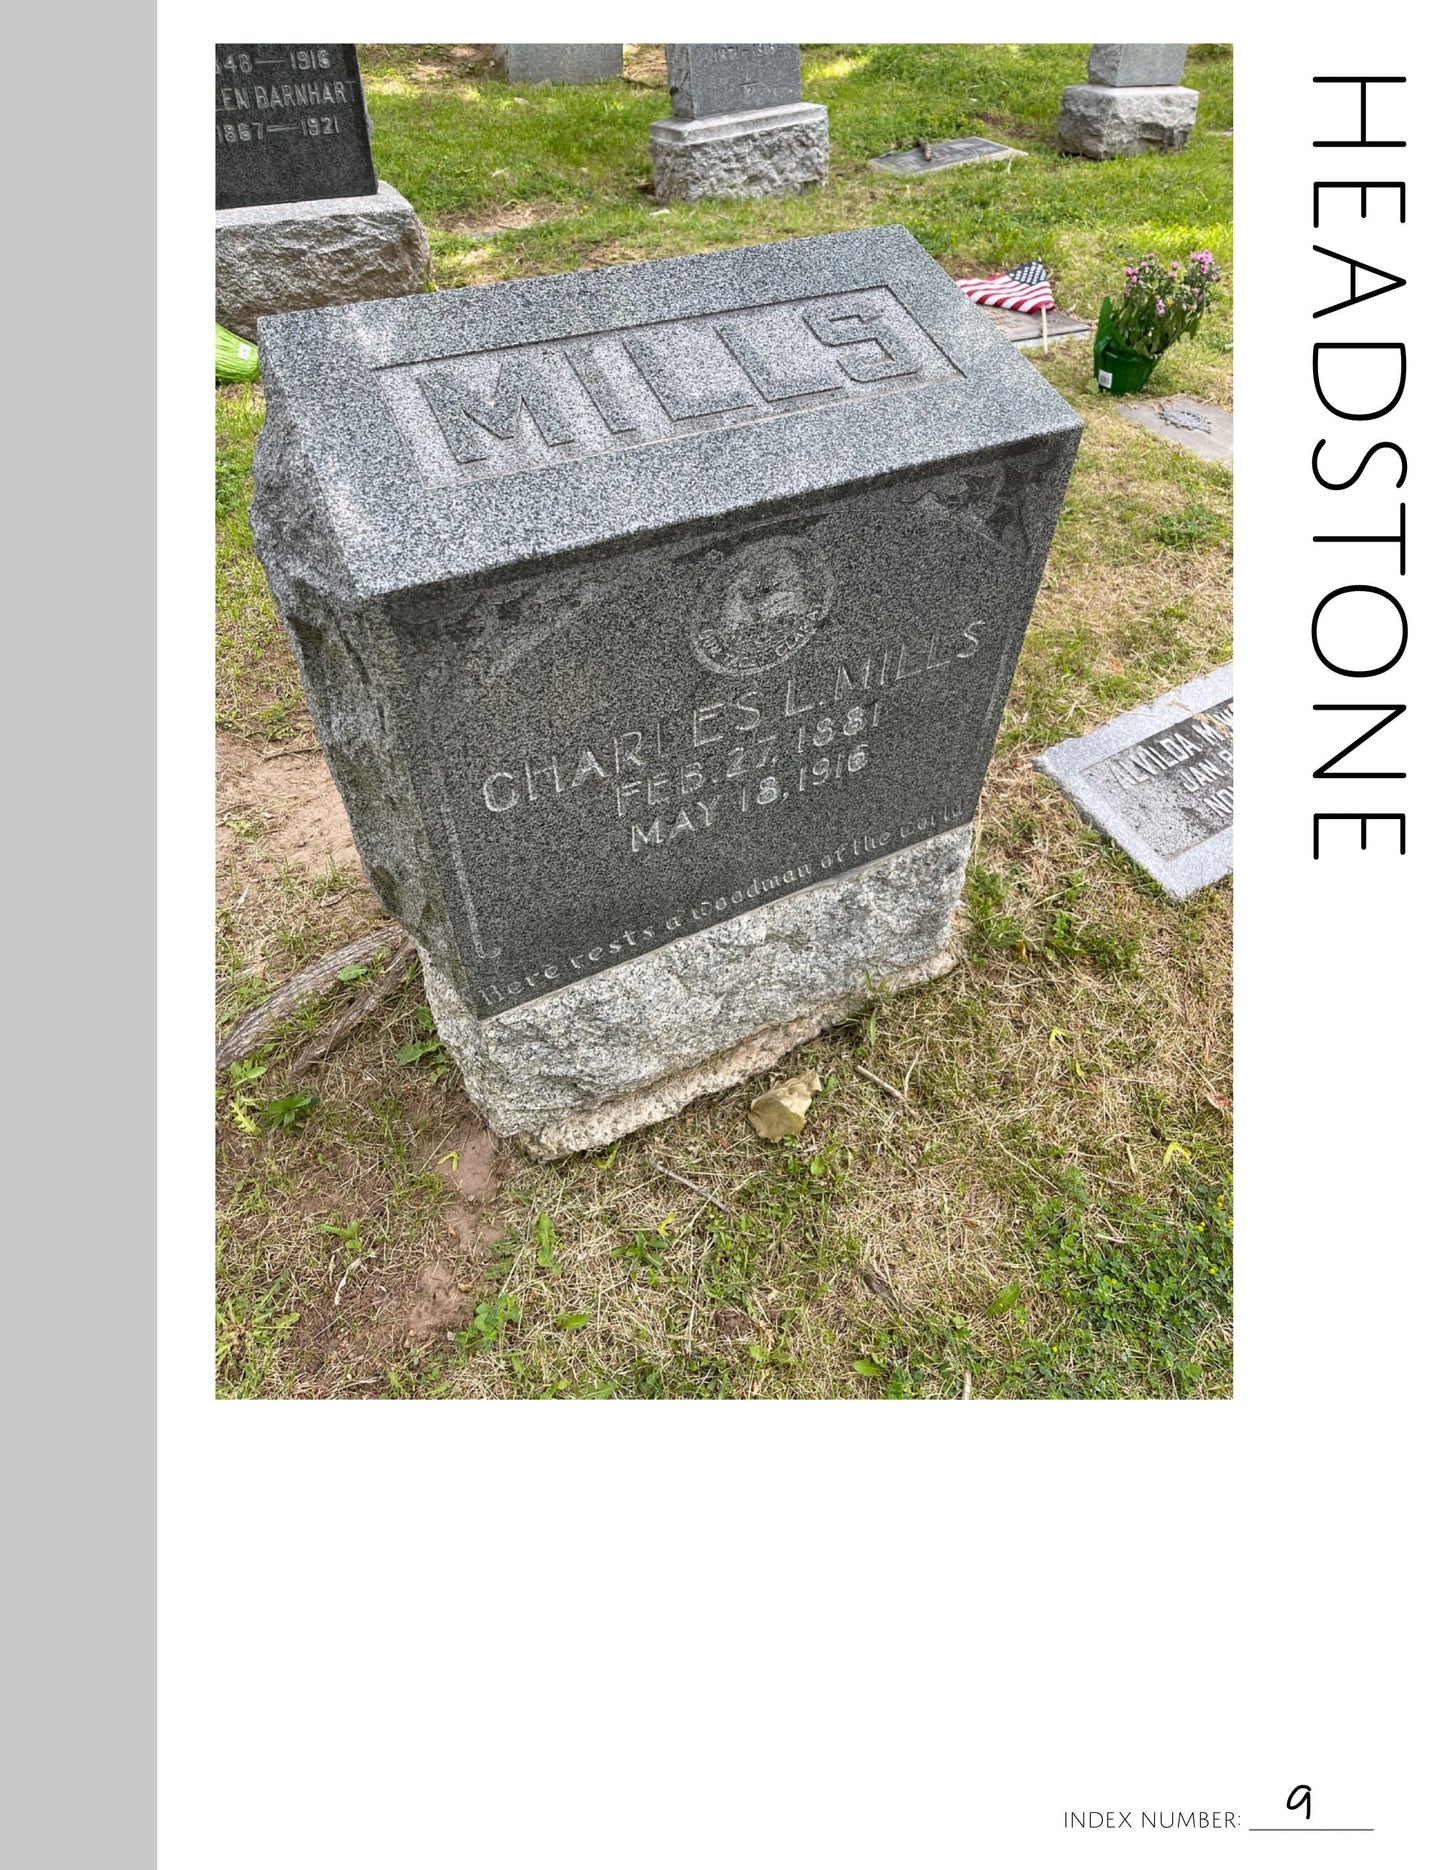 Headstone: Printable Genealogy Page (Digital Download)